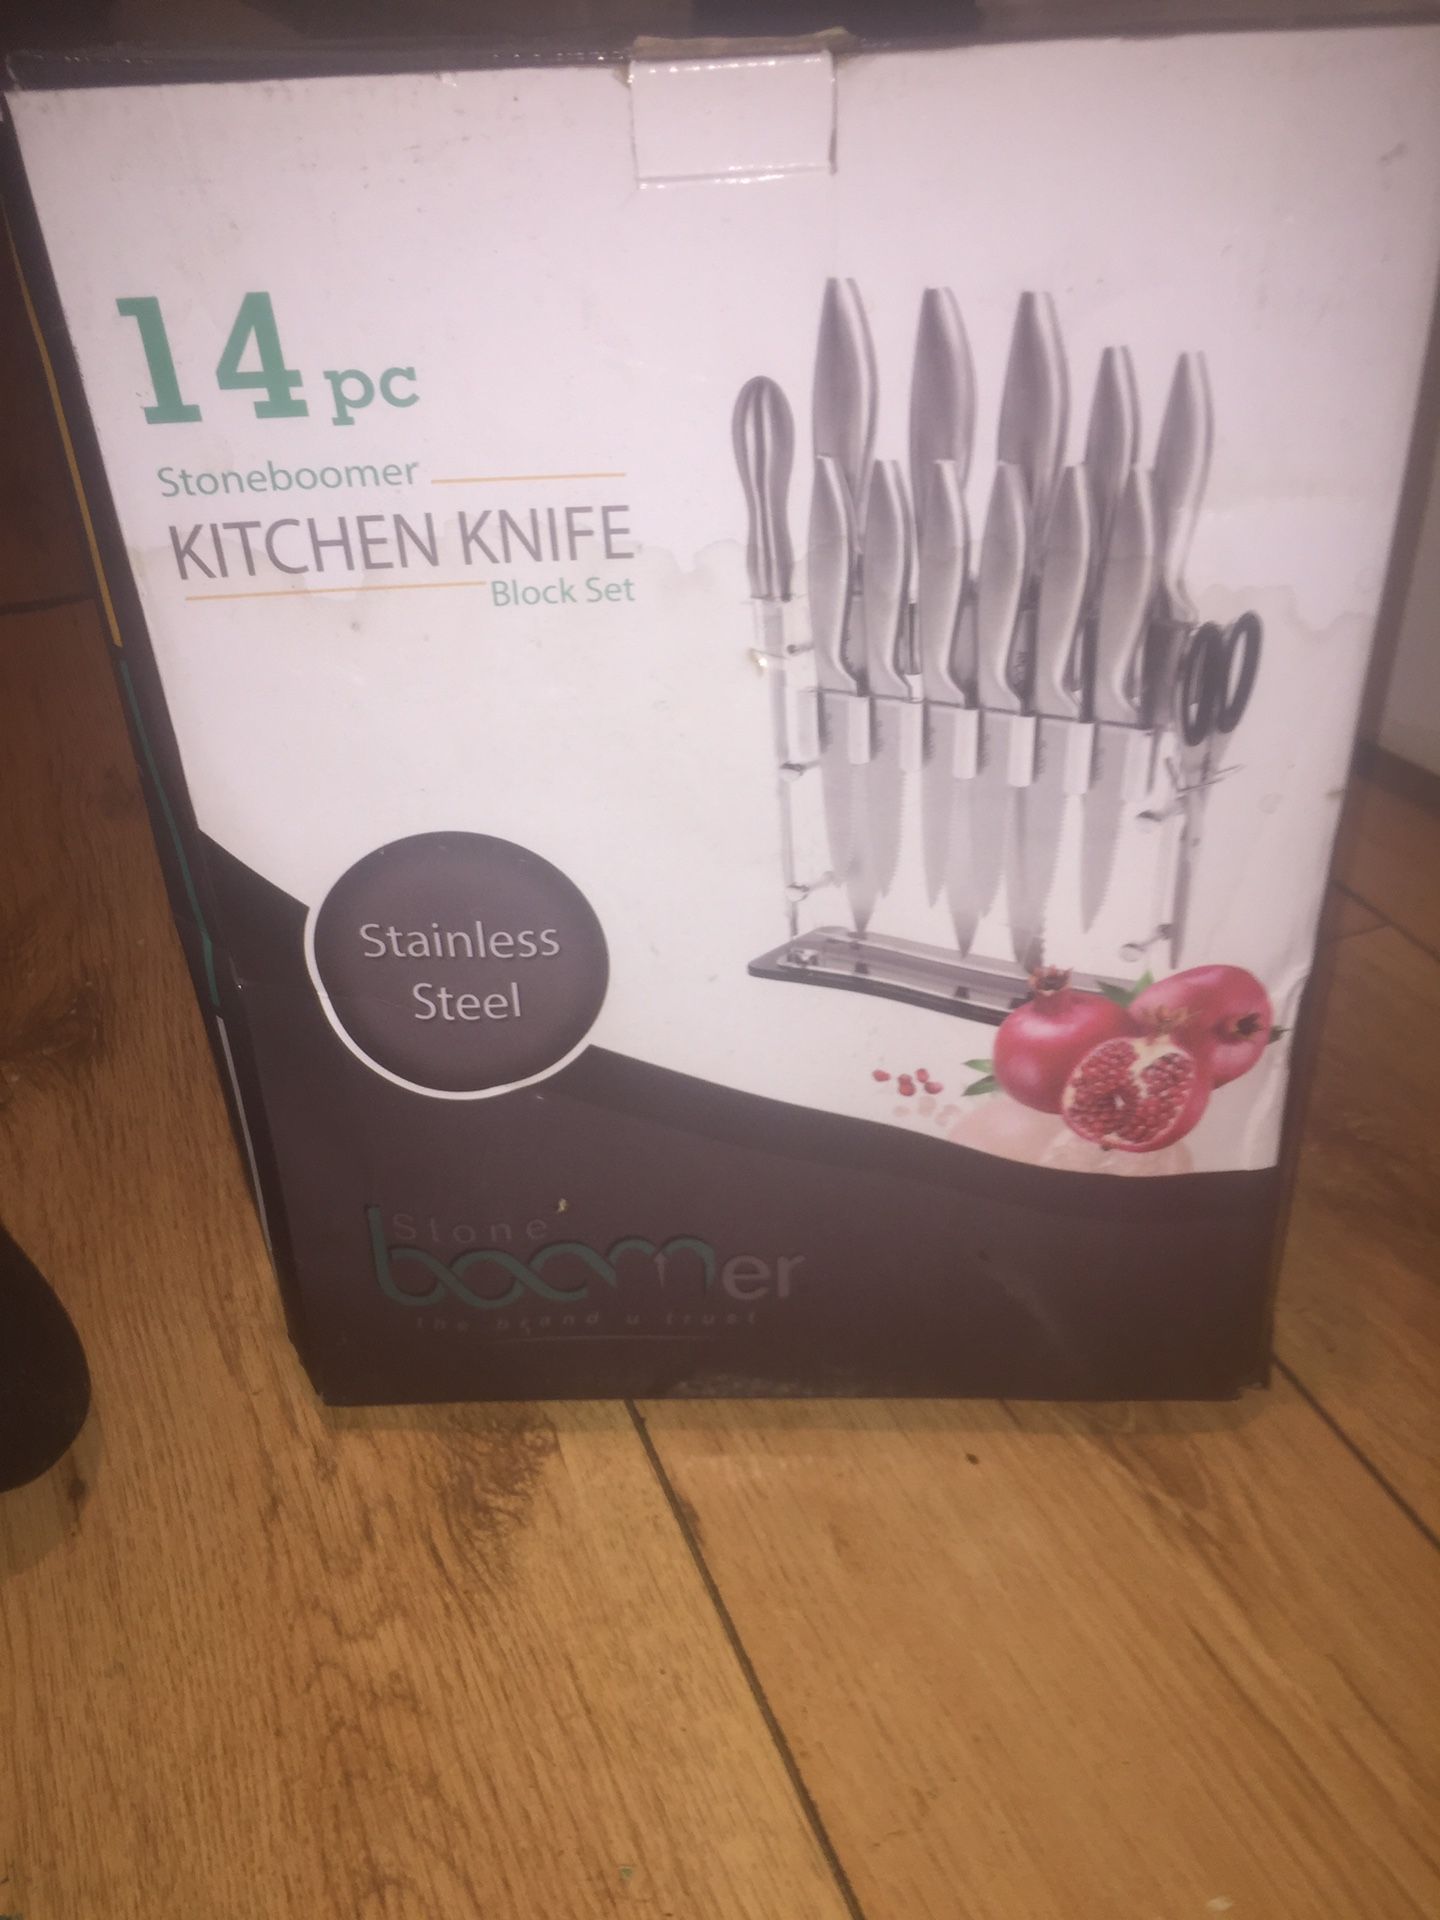 14 piece stone boomer kitchen knife set